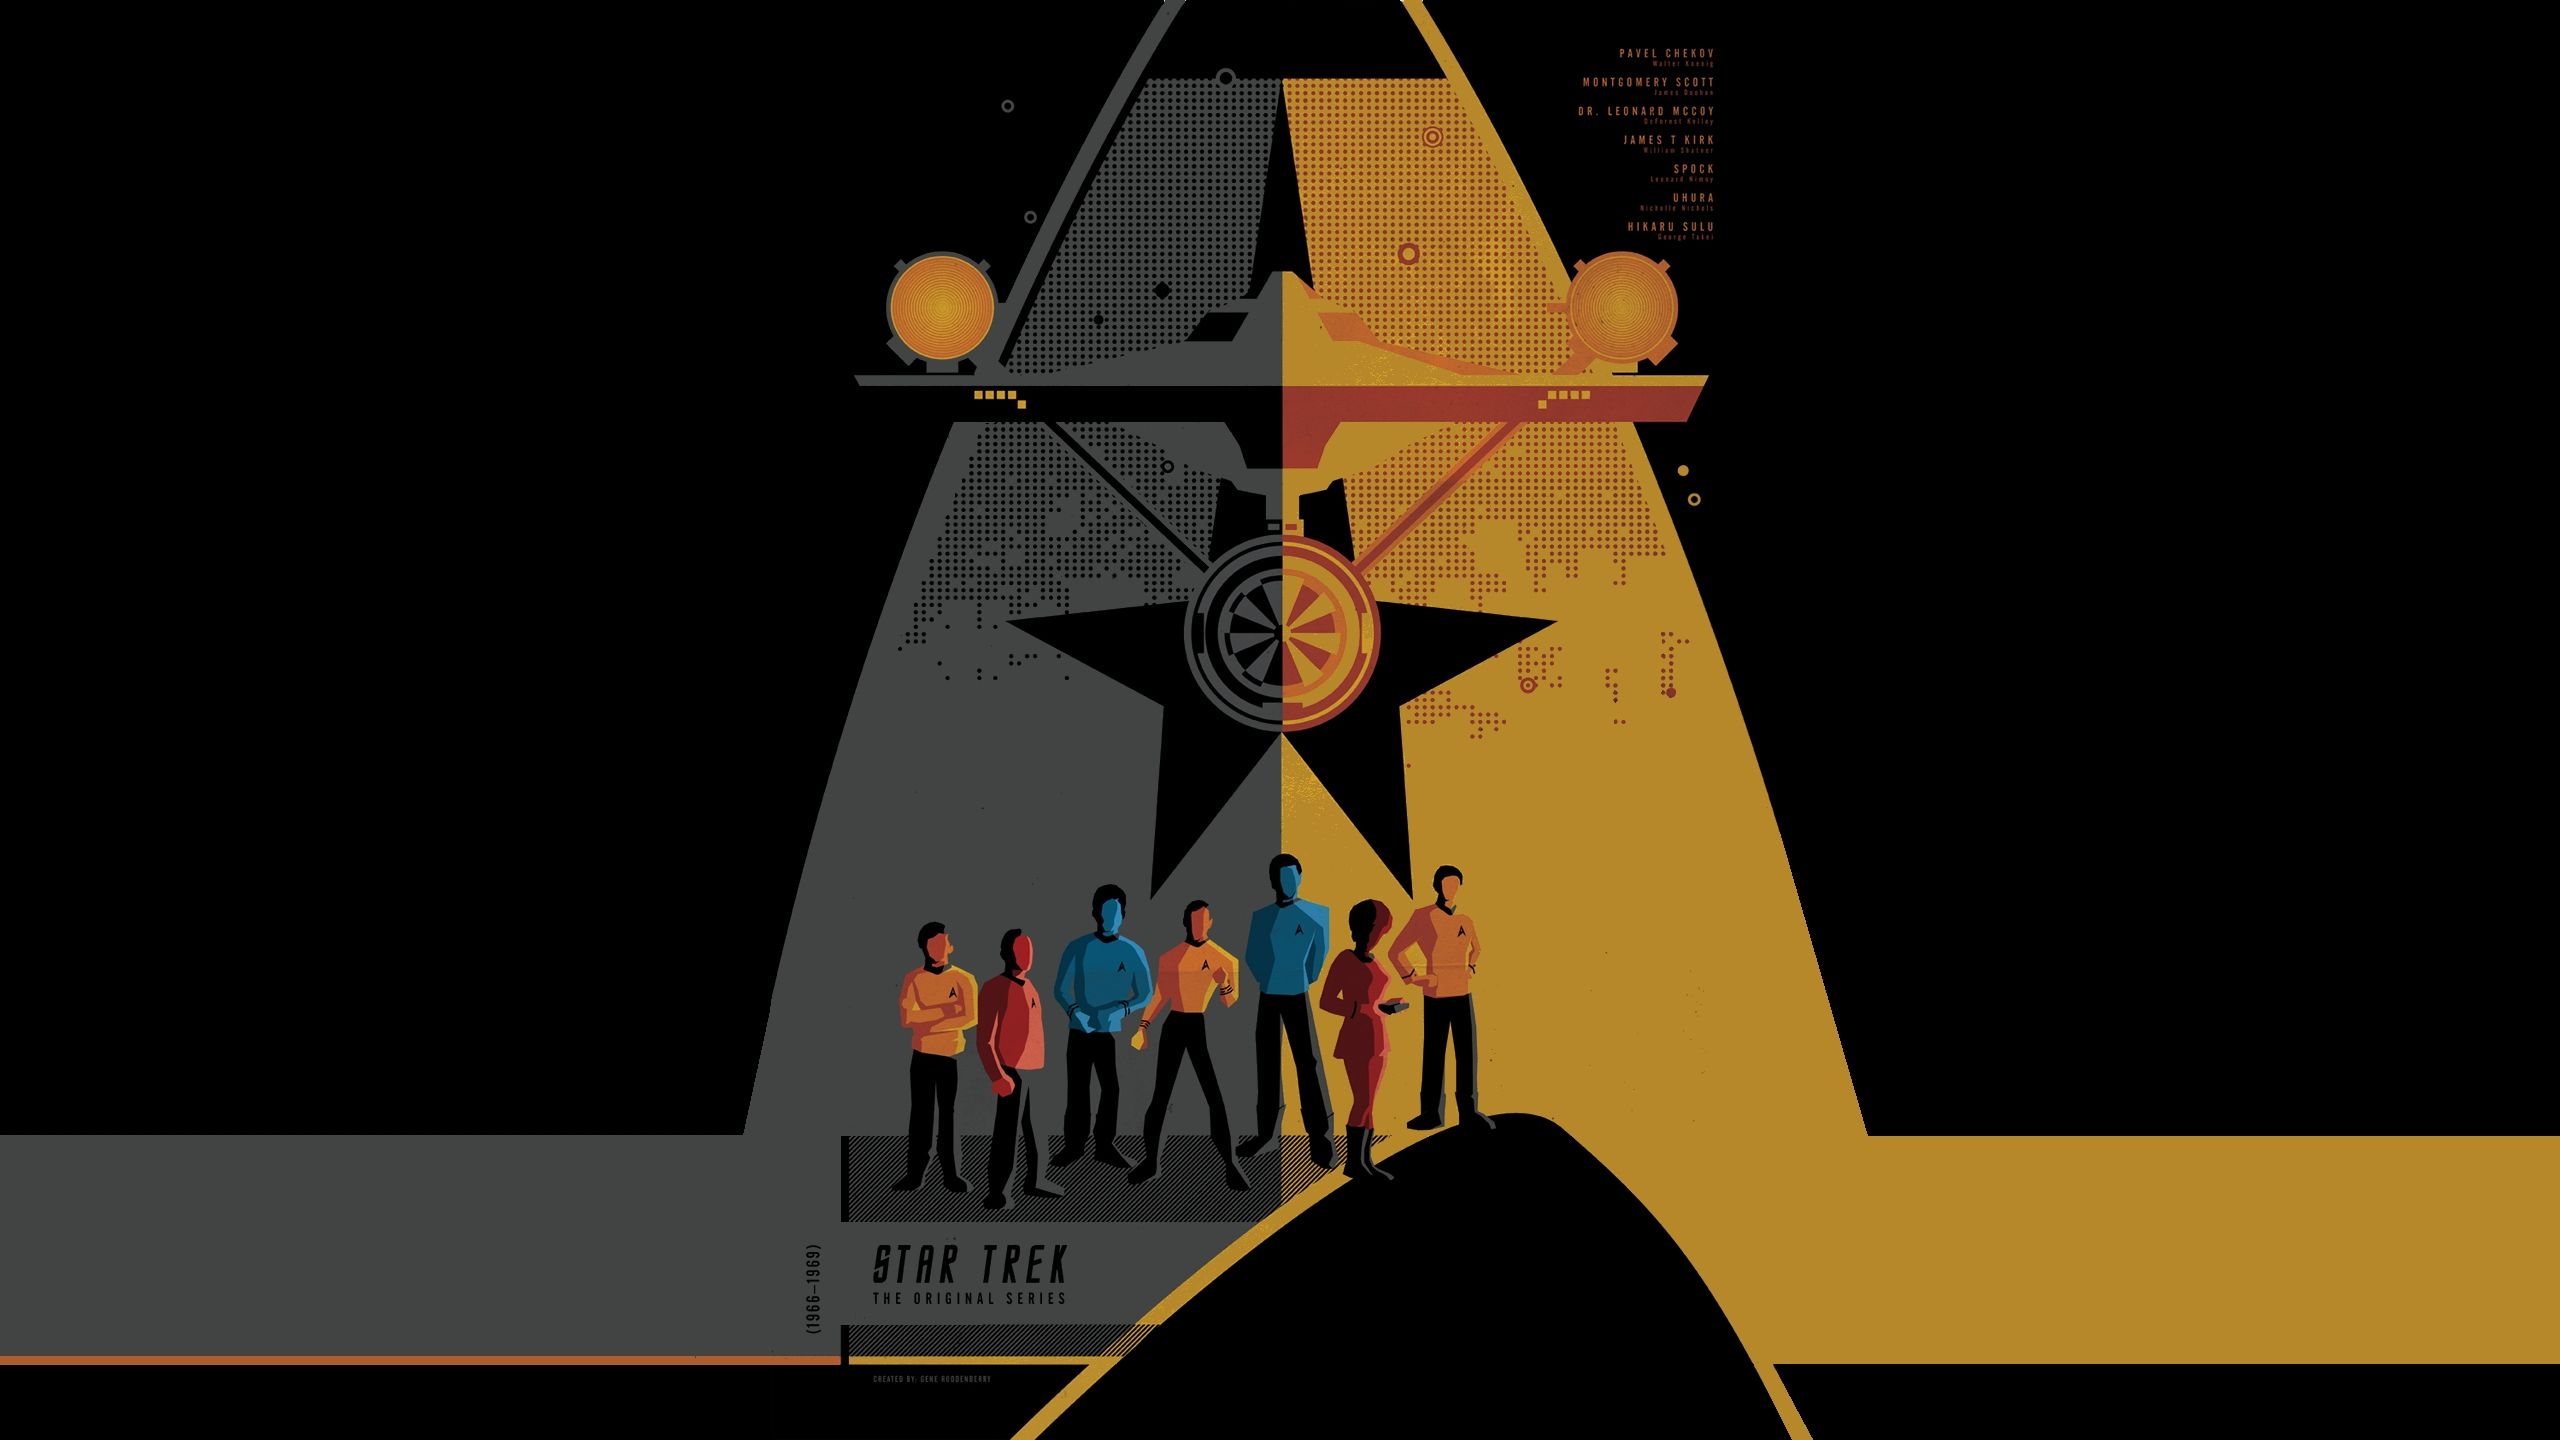 Free download Star Trek Tos Wallpaper Best Star Trek Wallpaper in High [2560x1440] for your Desktop, Mobile & Tablet. Explore Star Trek Tos Wallpaper. Star Trek Wallpaper High Resolution